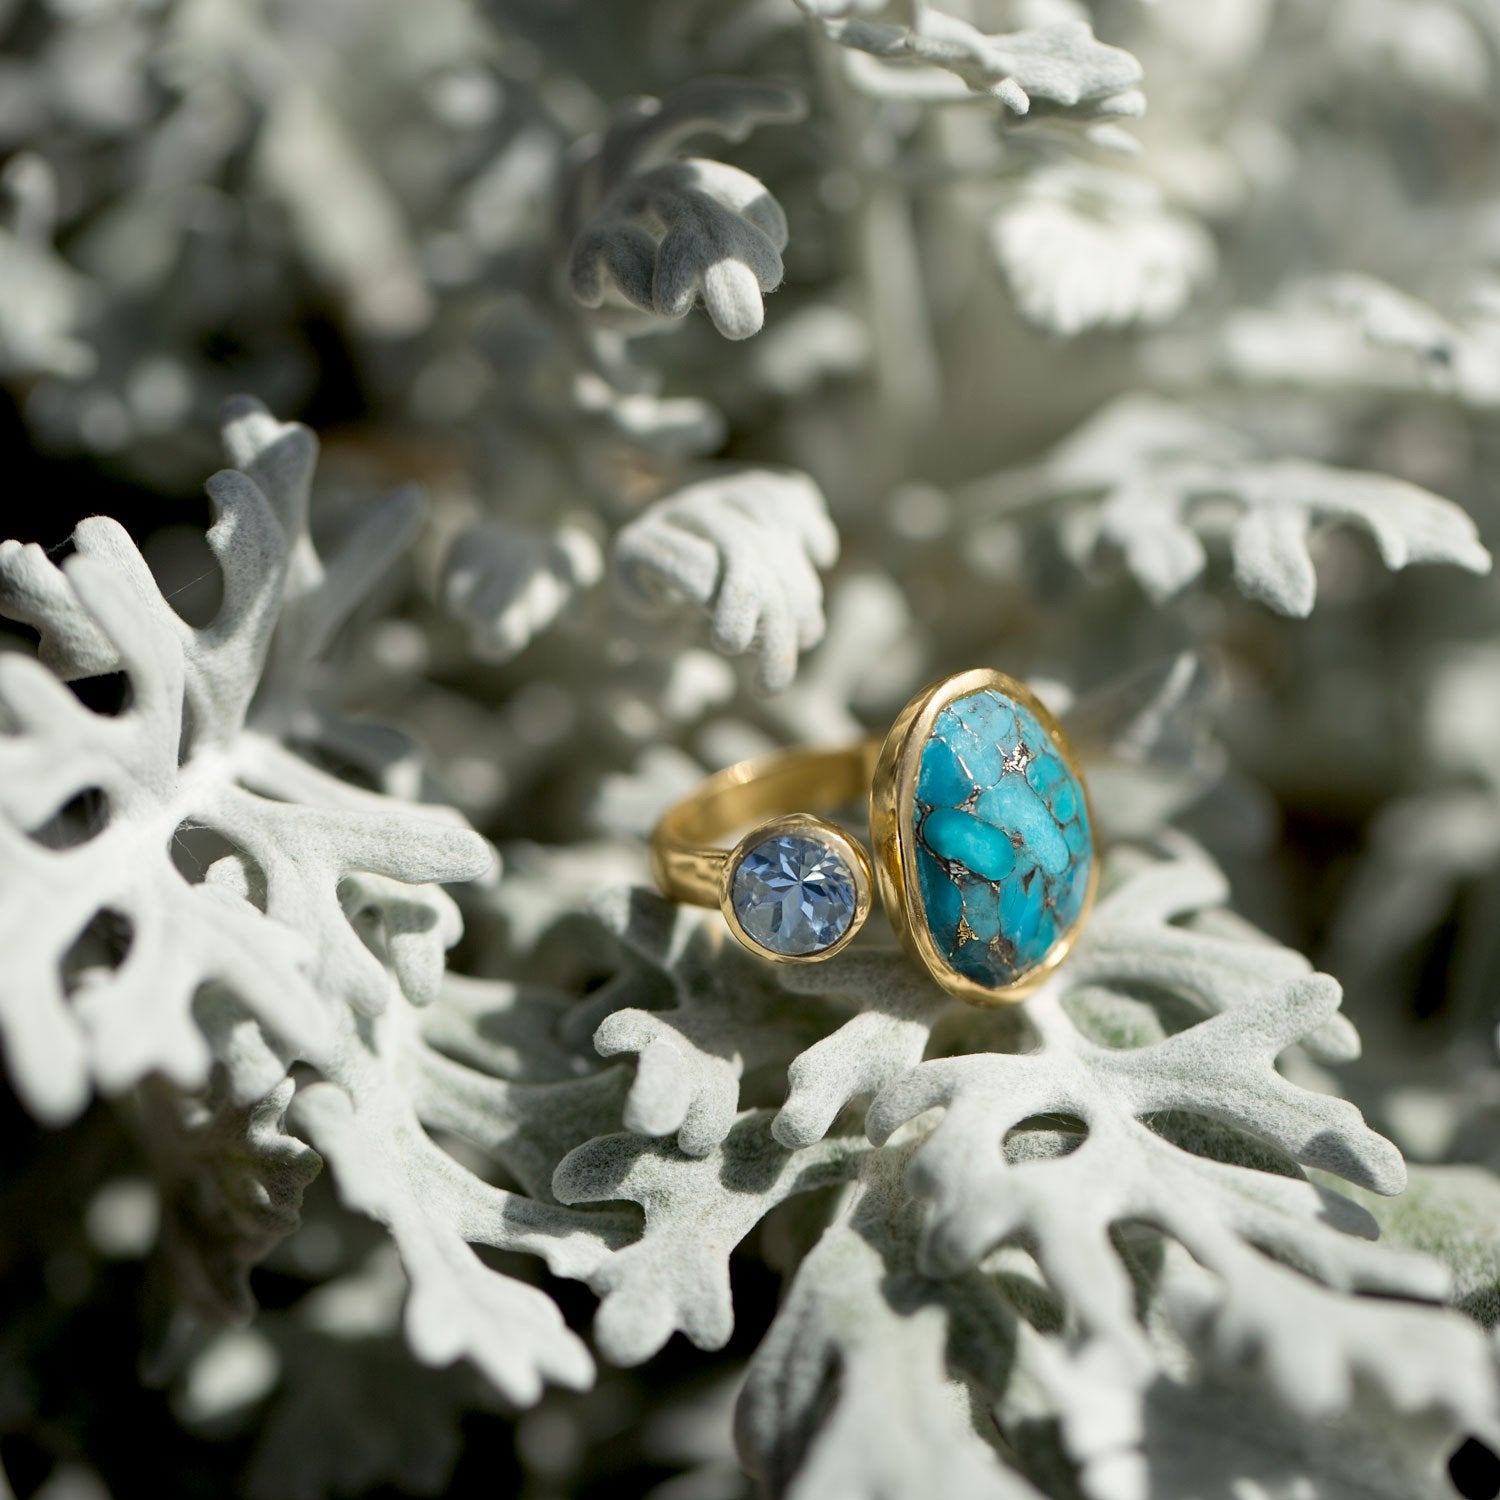 14 Karat Gold Plated Ring with Blue Topaz and Turquoise - Joyeria Lady